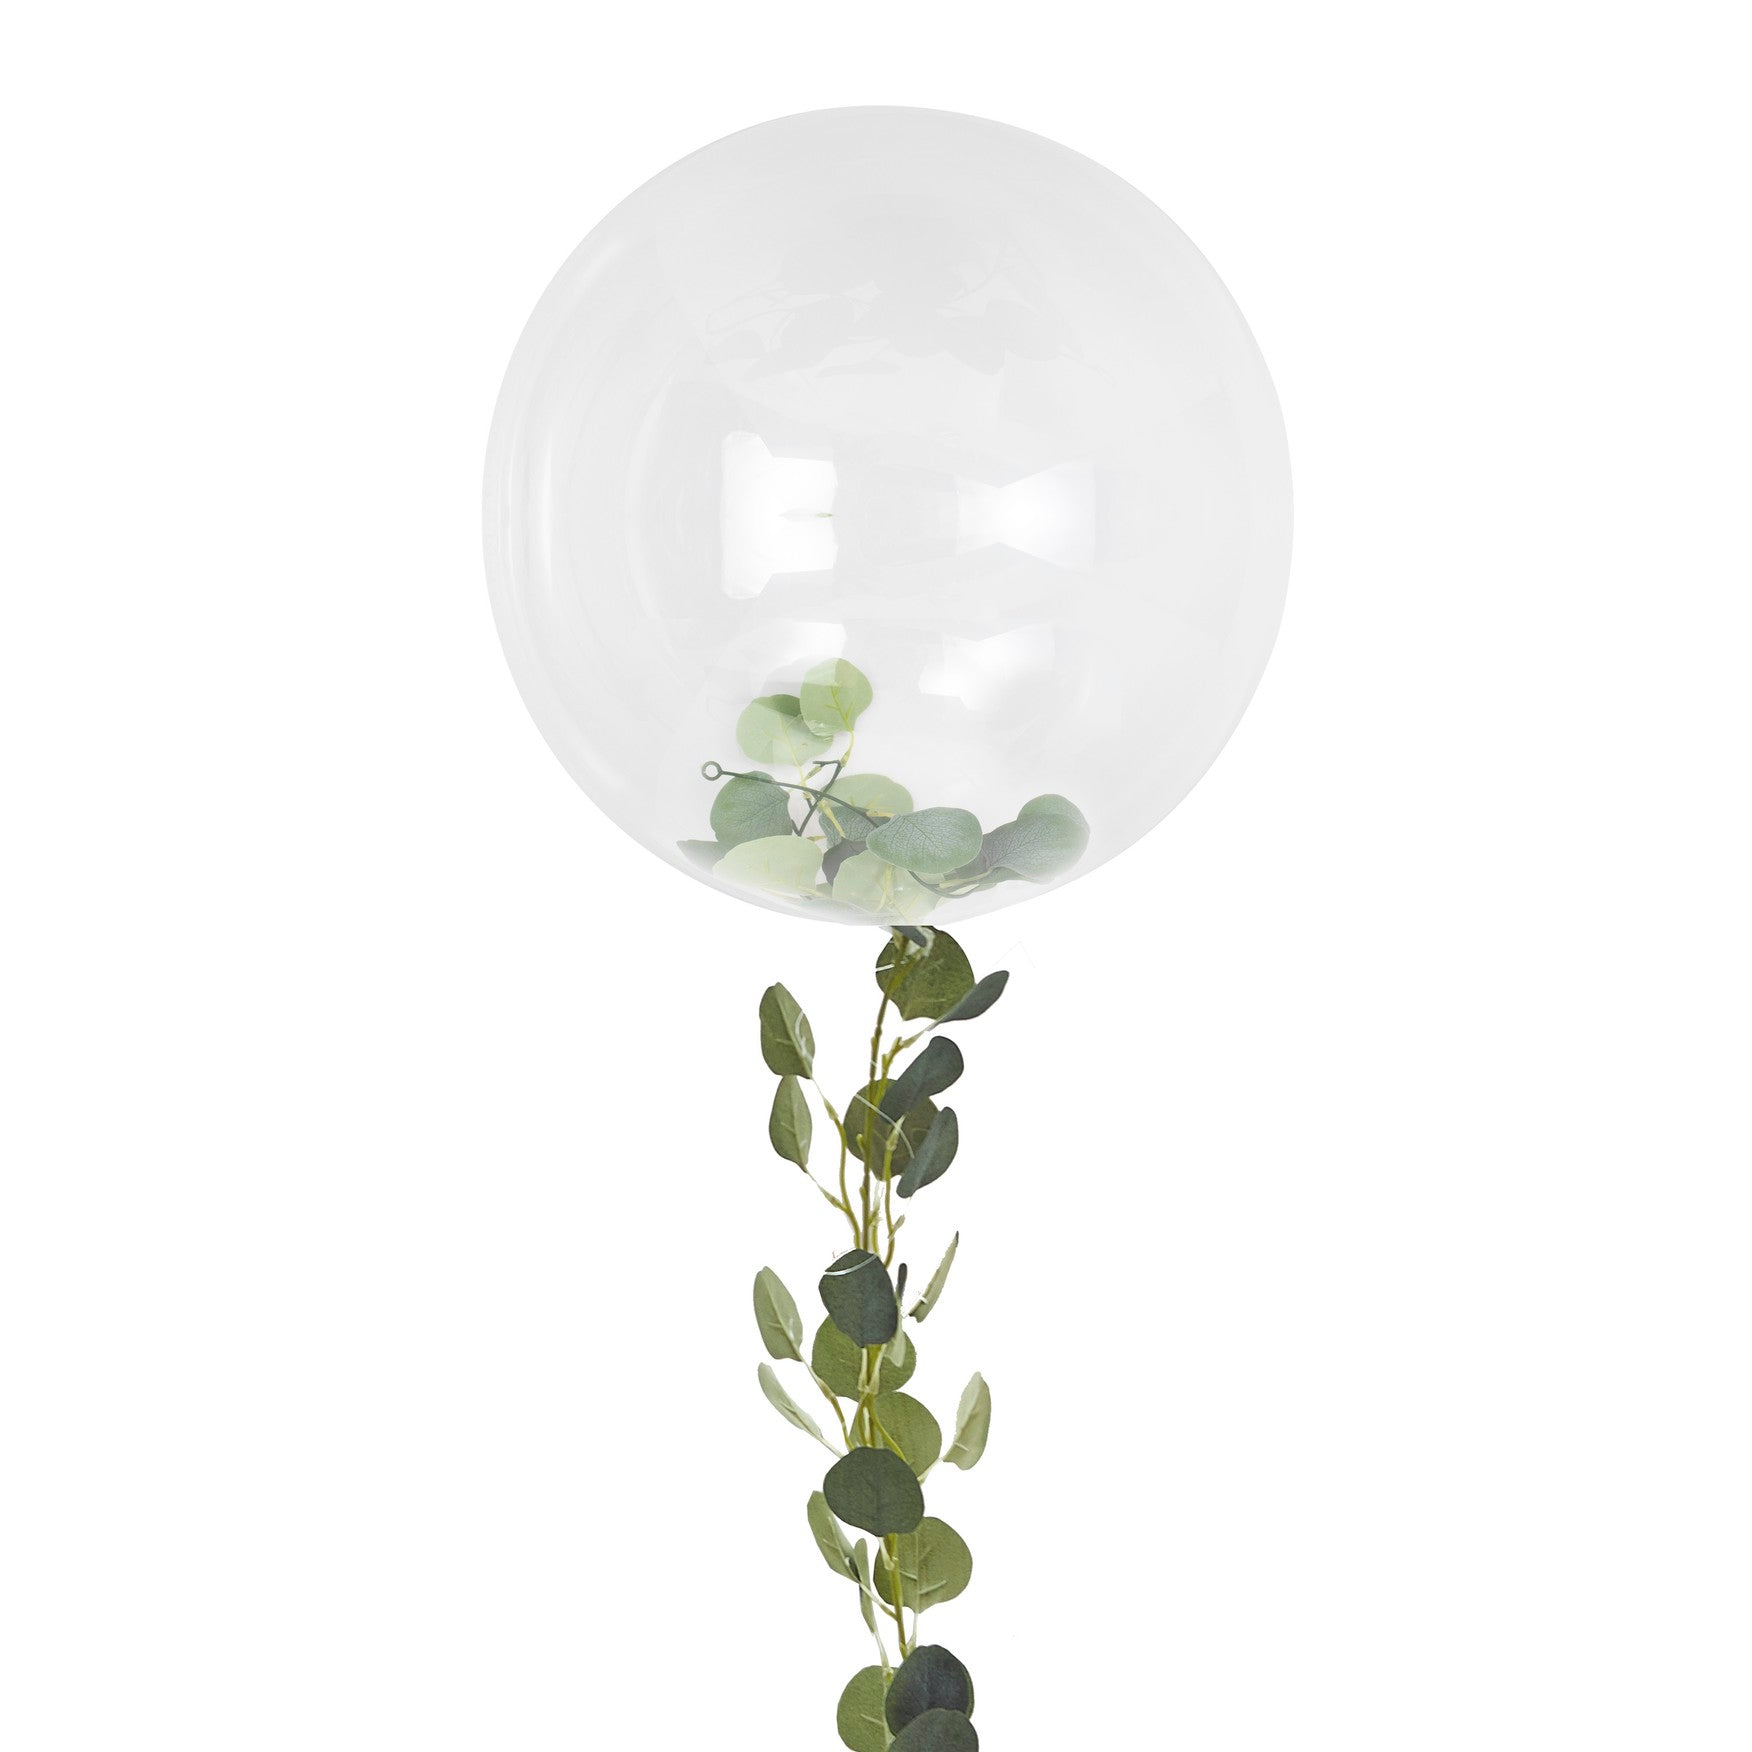 Orbz squishy balloon with vine leaf decoration